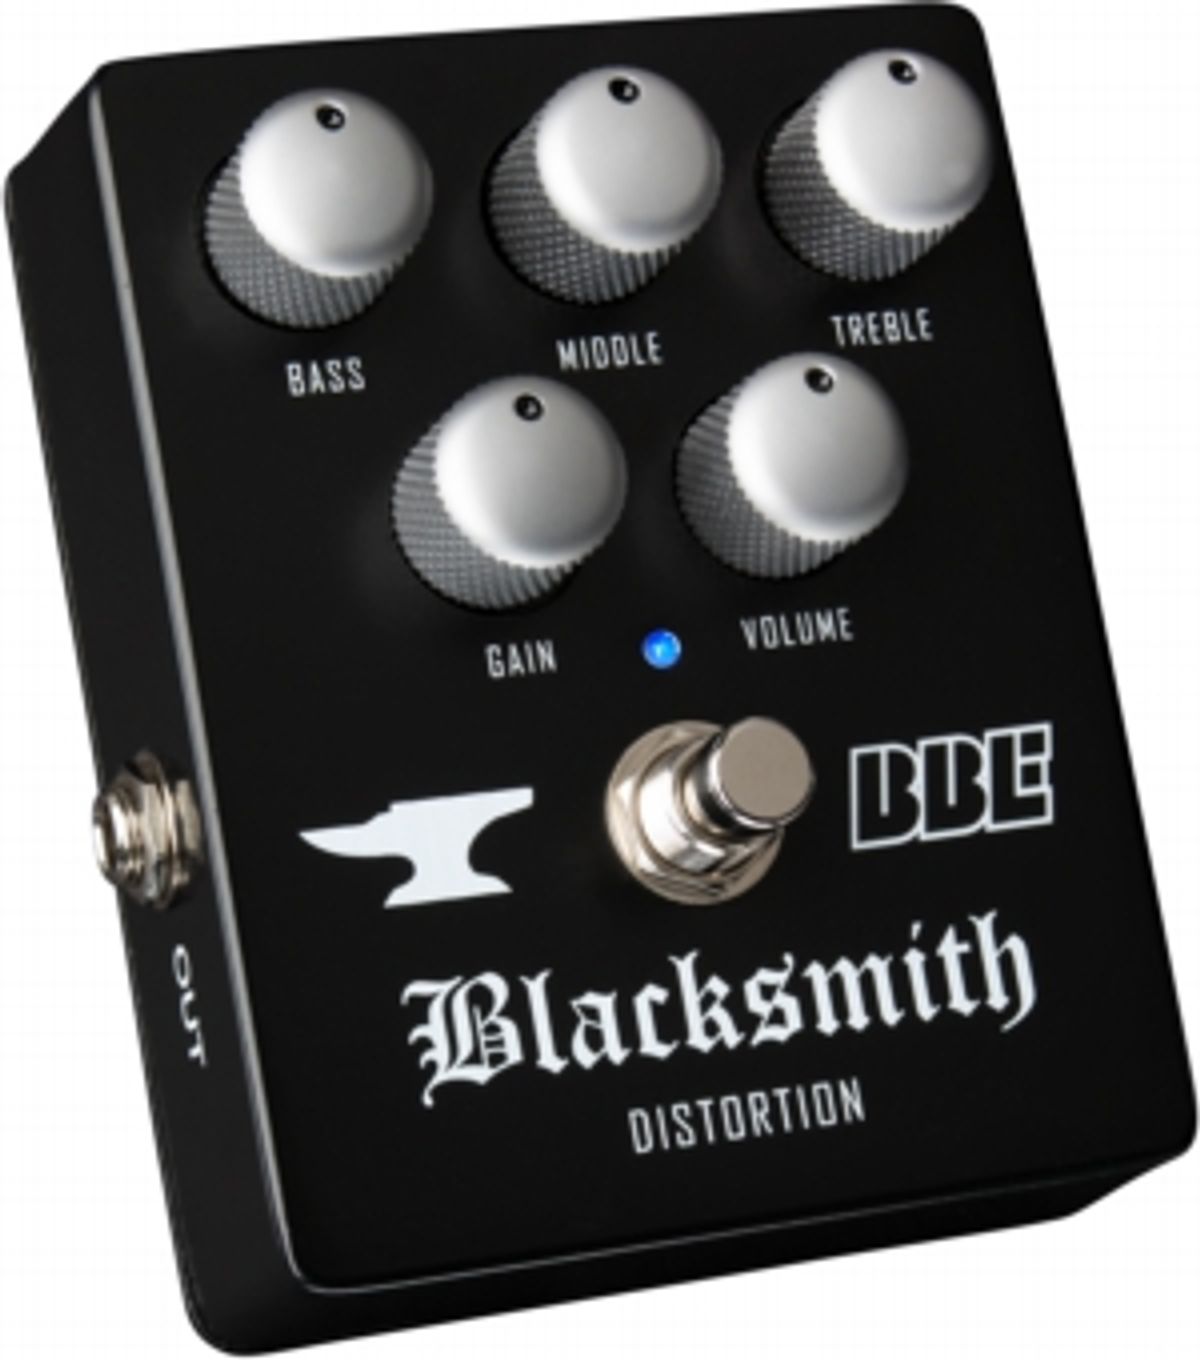 BBE Announces Blacksmith Distortion Pedal